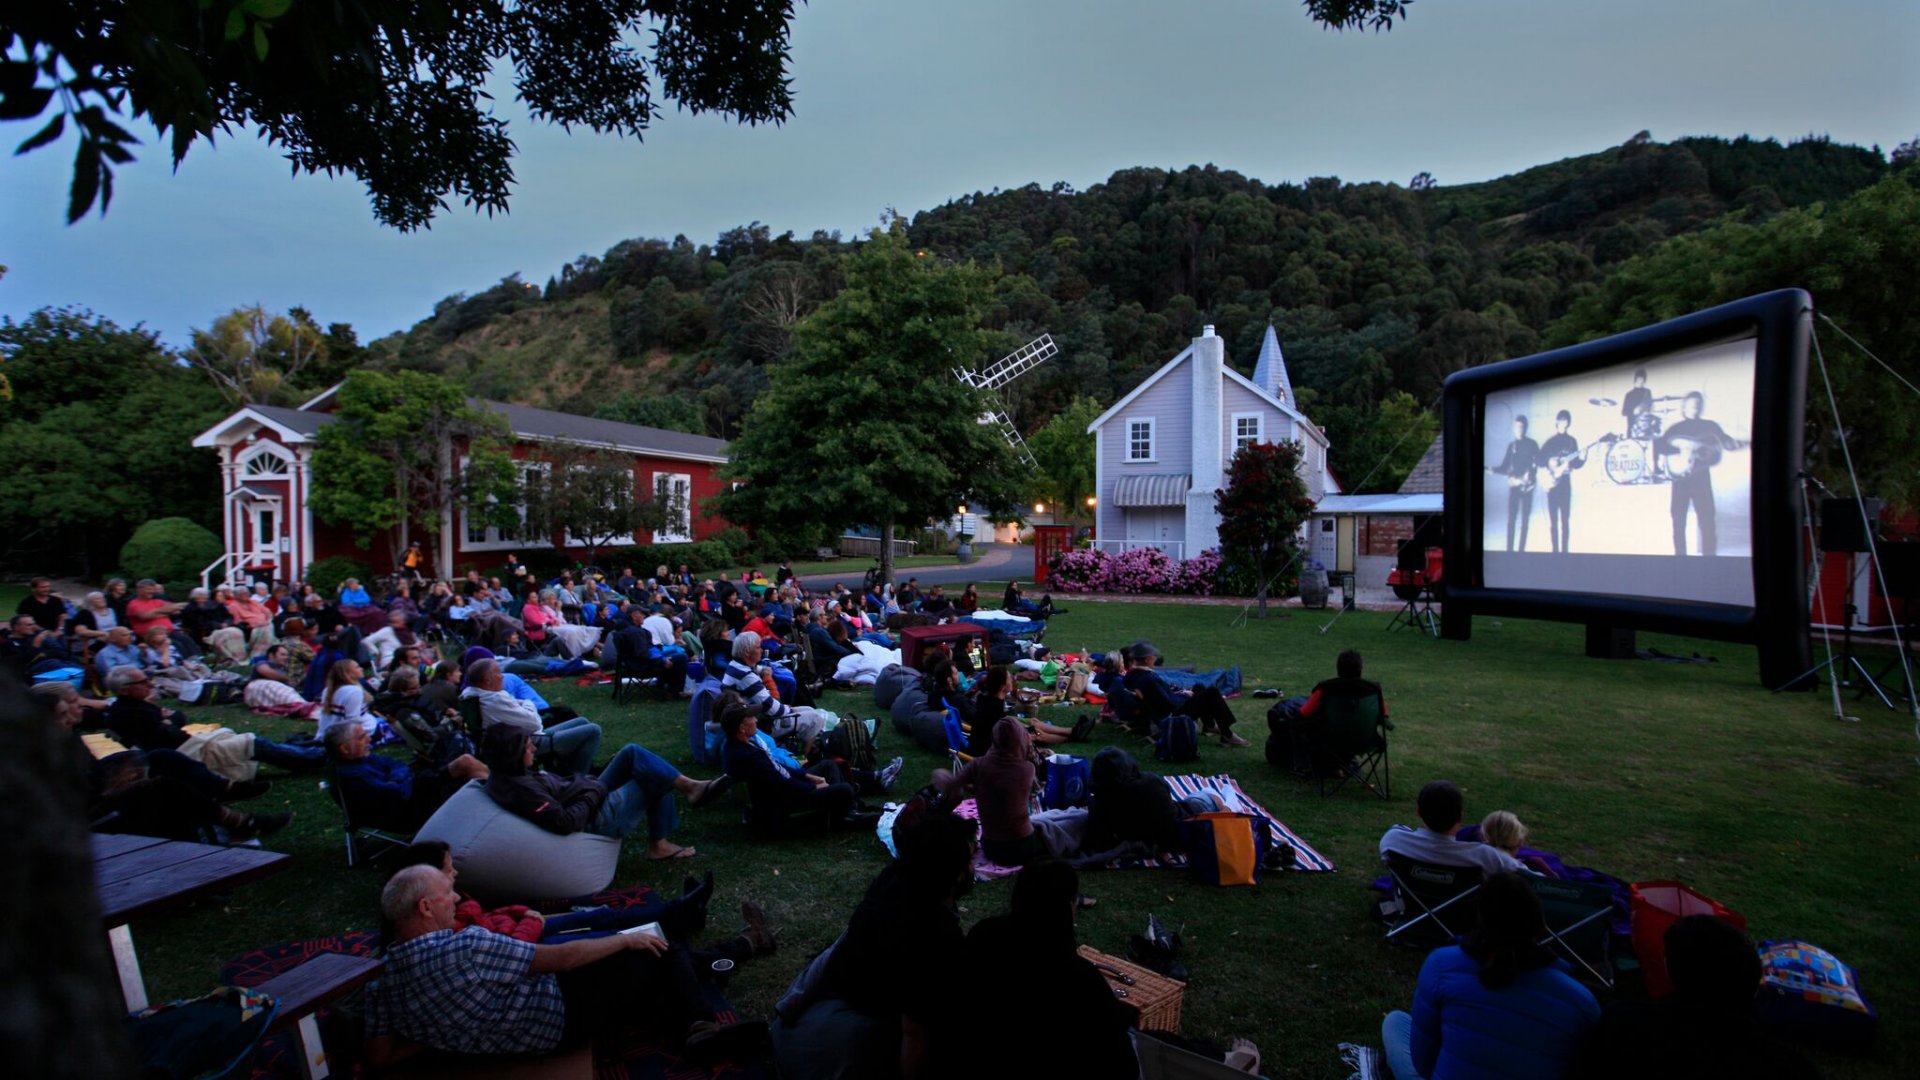 Summer Movies al Fresco returns, with 14 screenings across seven locations.